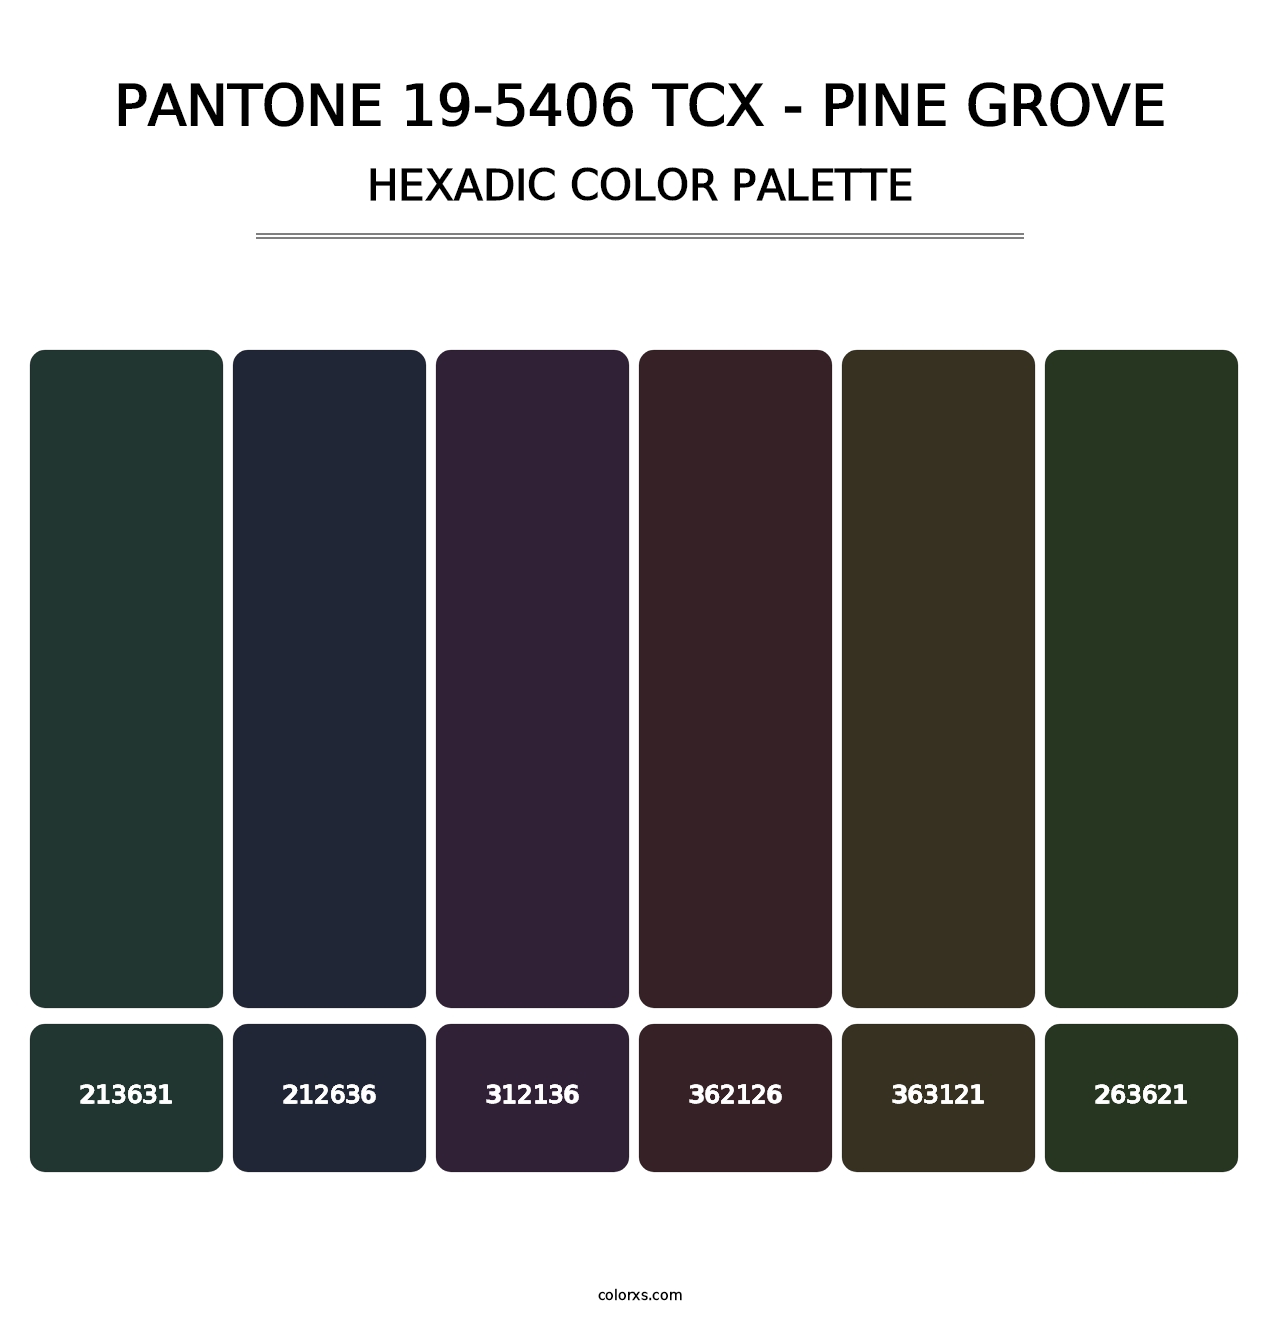 PANTONE 19-5406 TCX - Pine Grove - Hexadic Color Palette